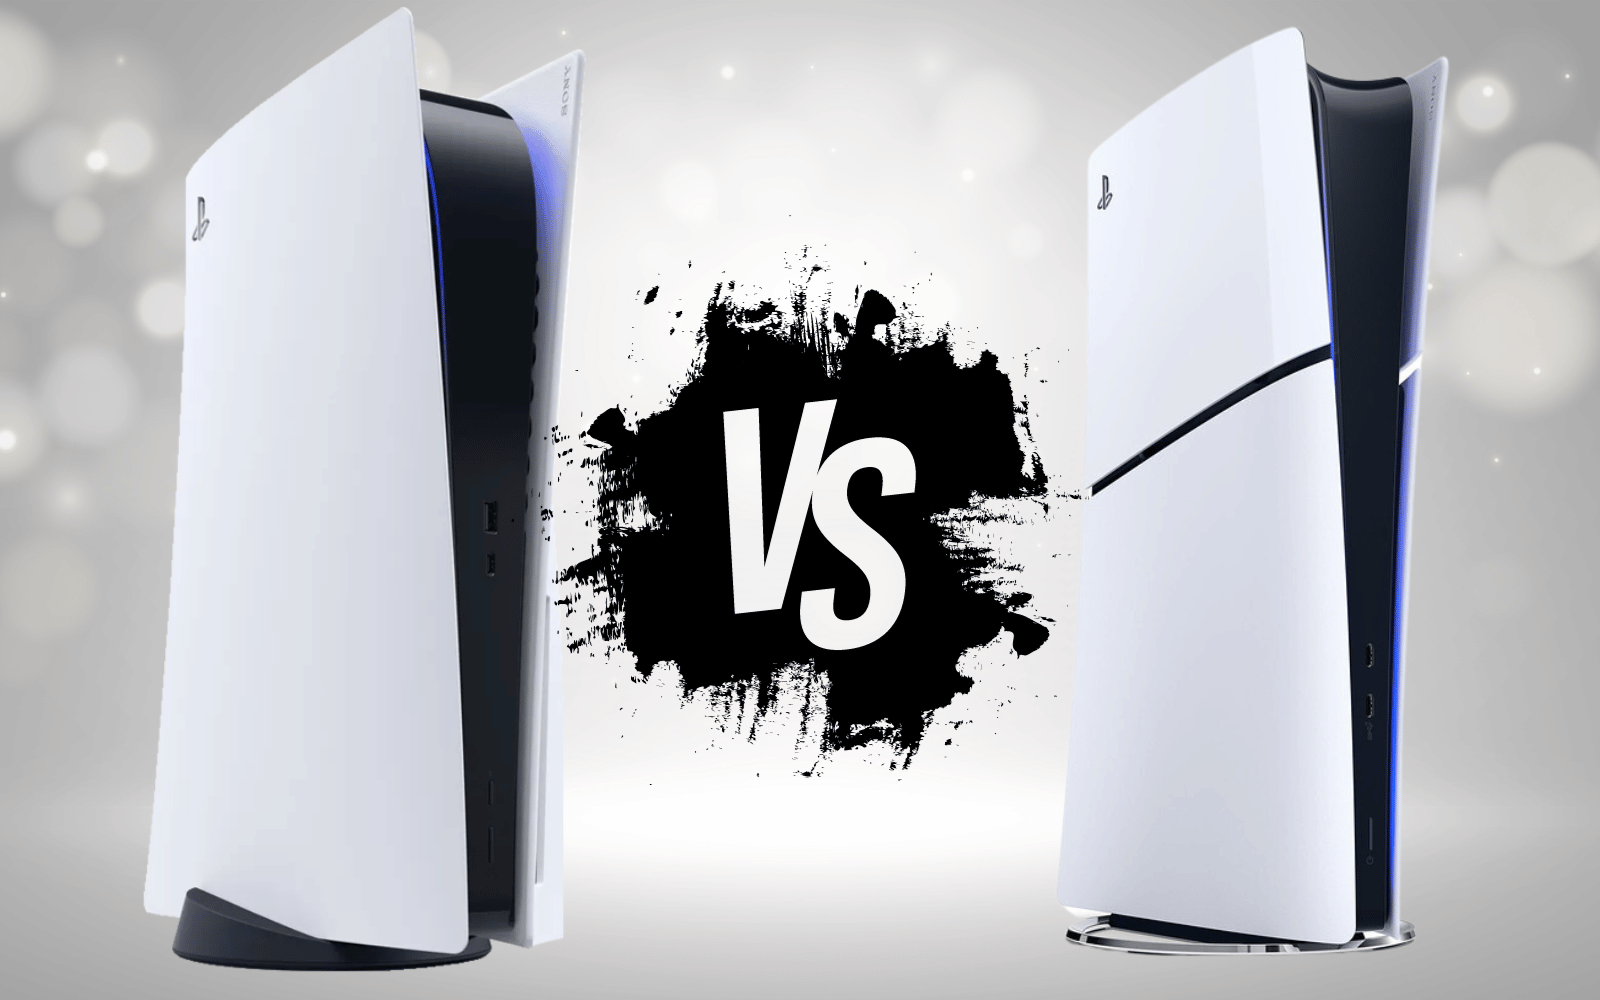 PS5 Slim vs Original PS5 